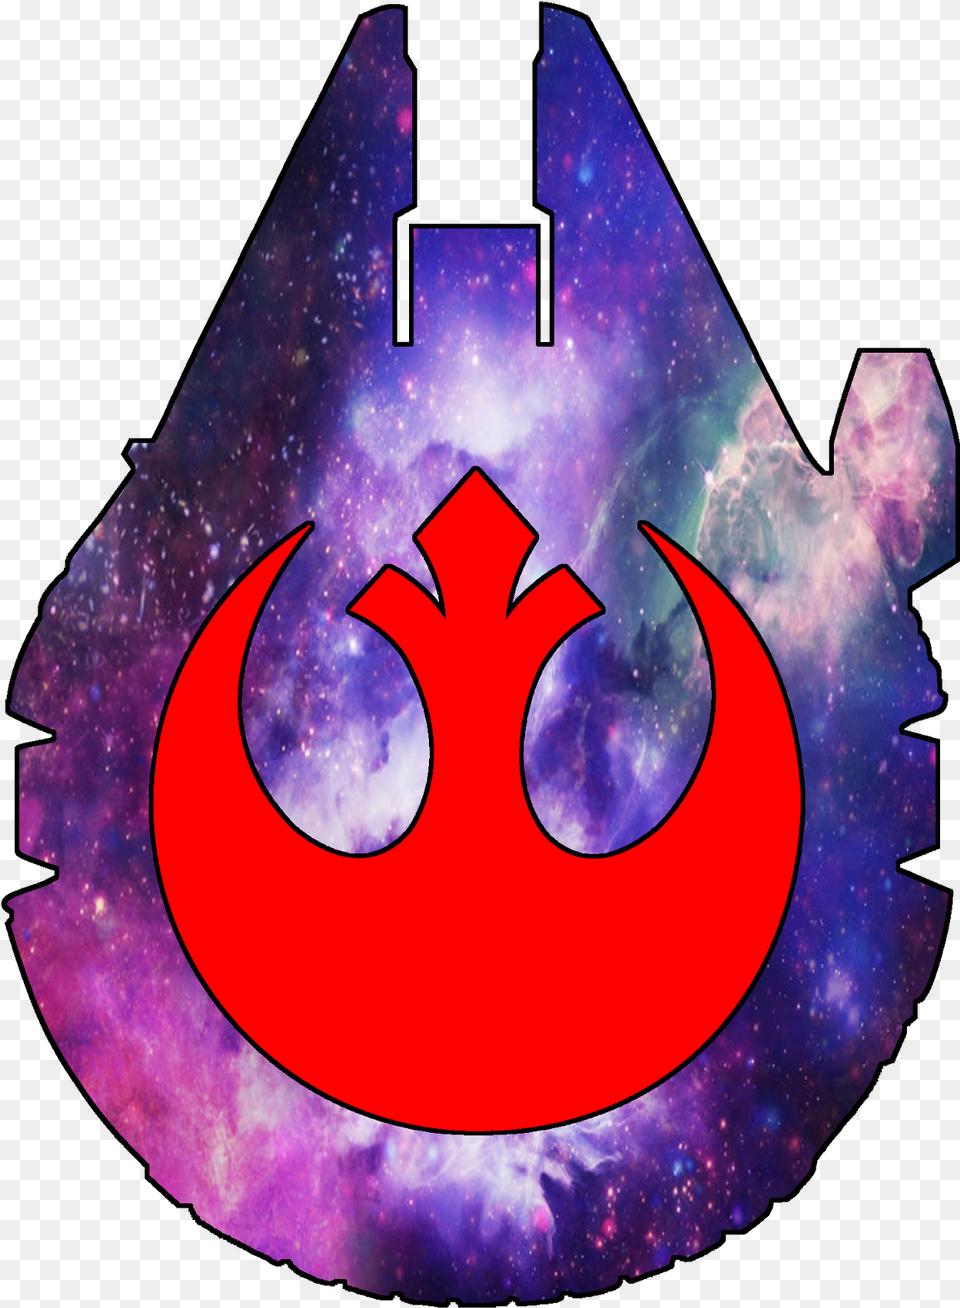 Pop Pixel Shop Star Wars Millennium Falcon Rebel Galaxy Symbol Tattoo Star Wars Rebels, Nature, Night, Outdoors, Astronomy Free Transparent Png